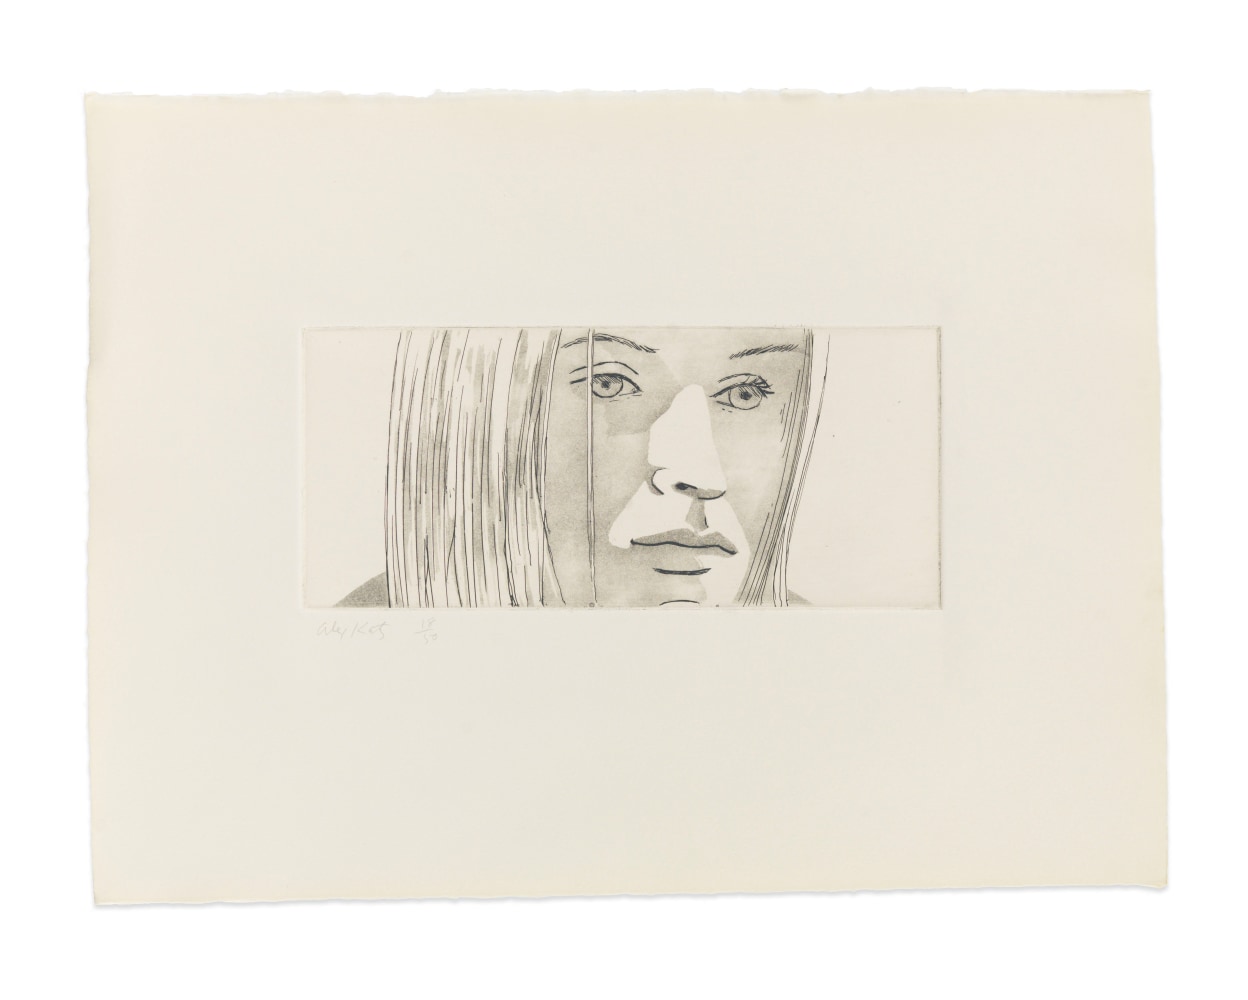 Aquatint by Alex Katz of a portrait of a woman's face